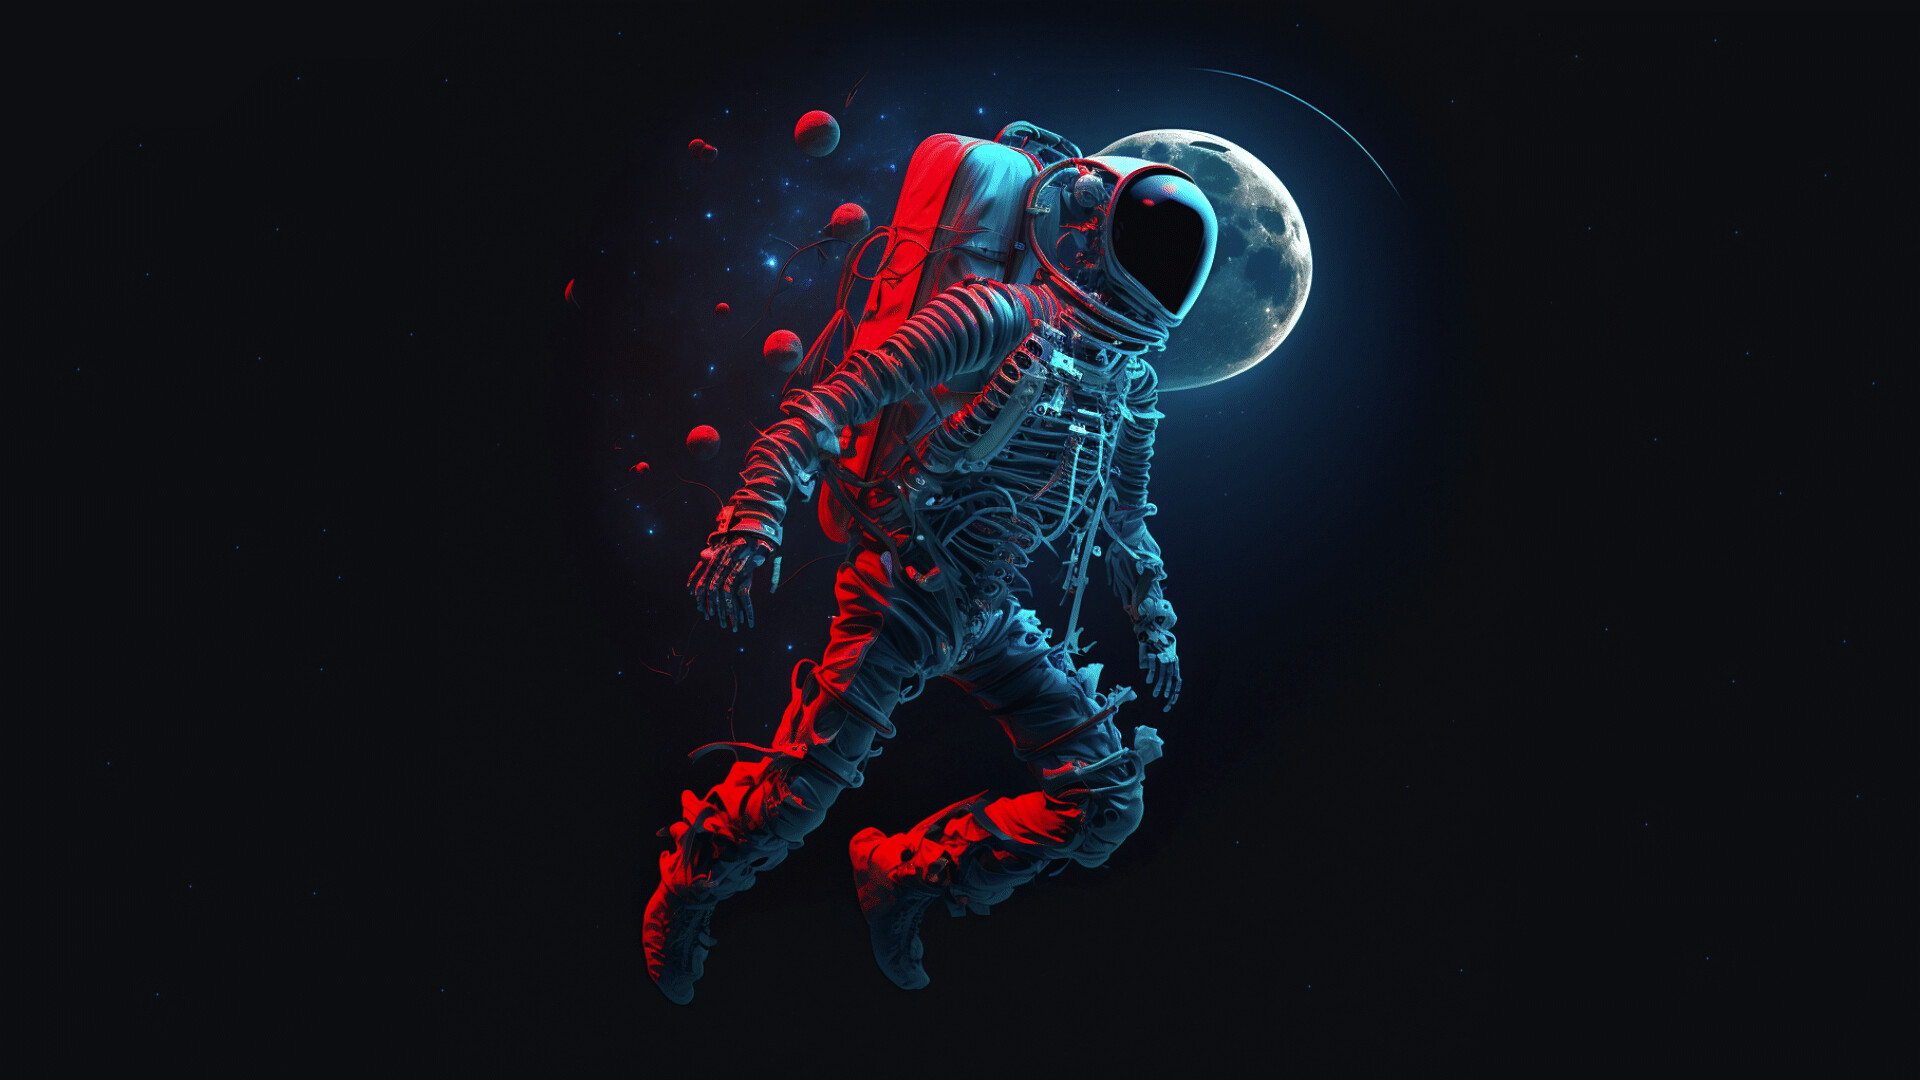 ArtStation - An astronaut in space